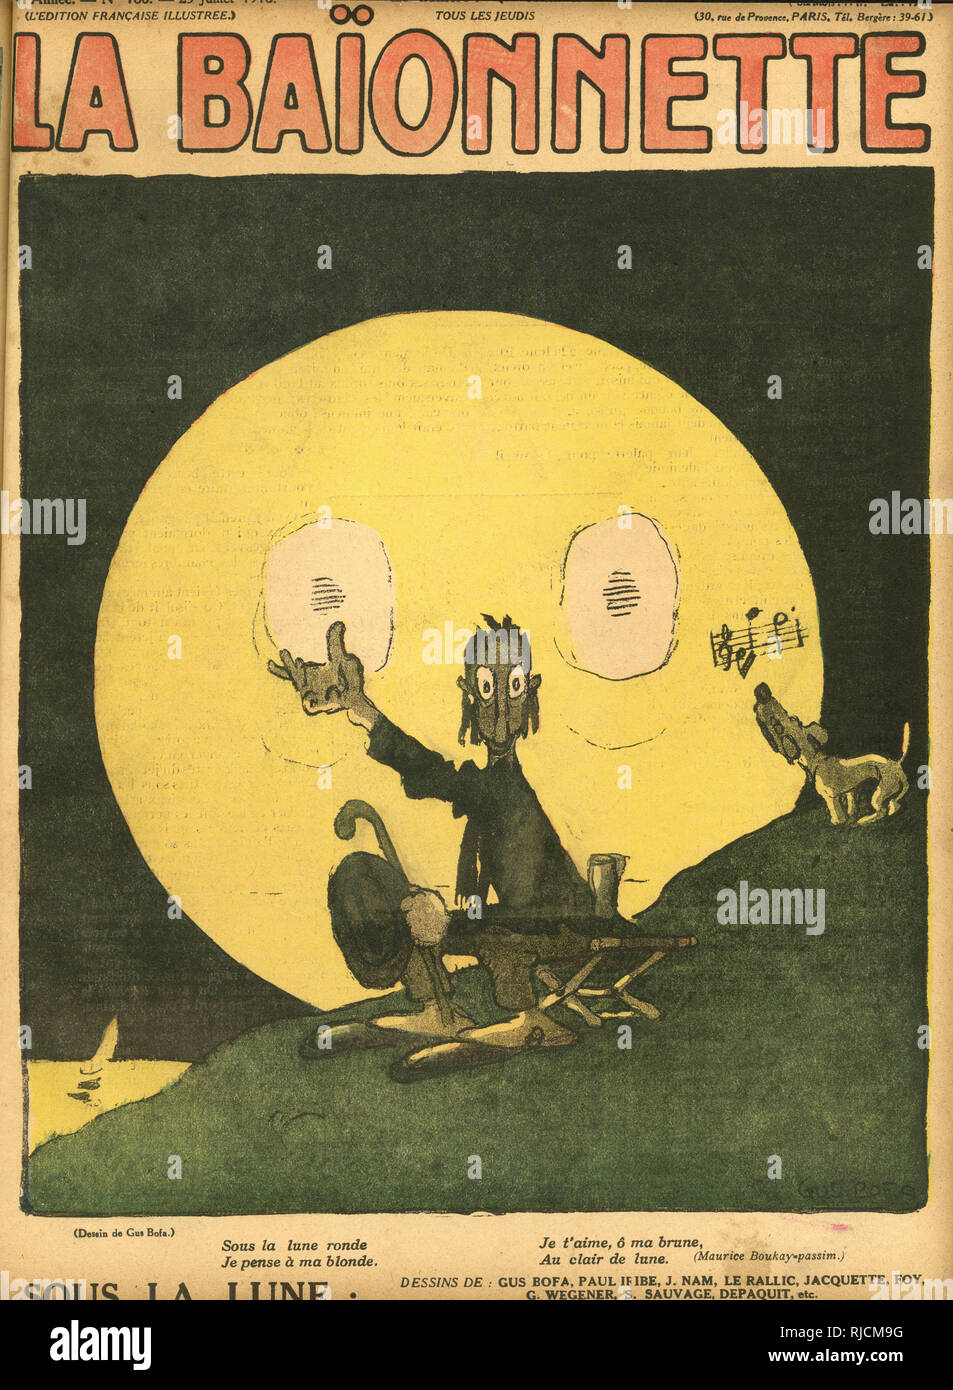 Front cover, La Baionnette, WW1 Stock Photo